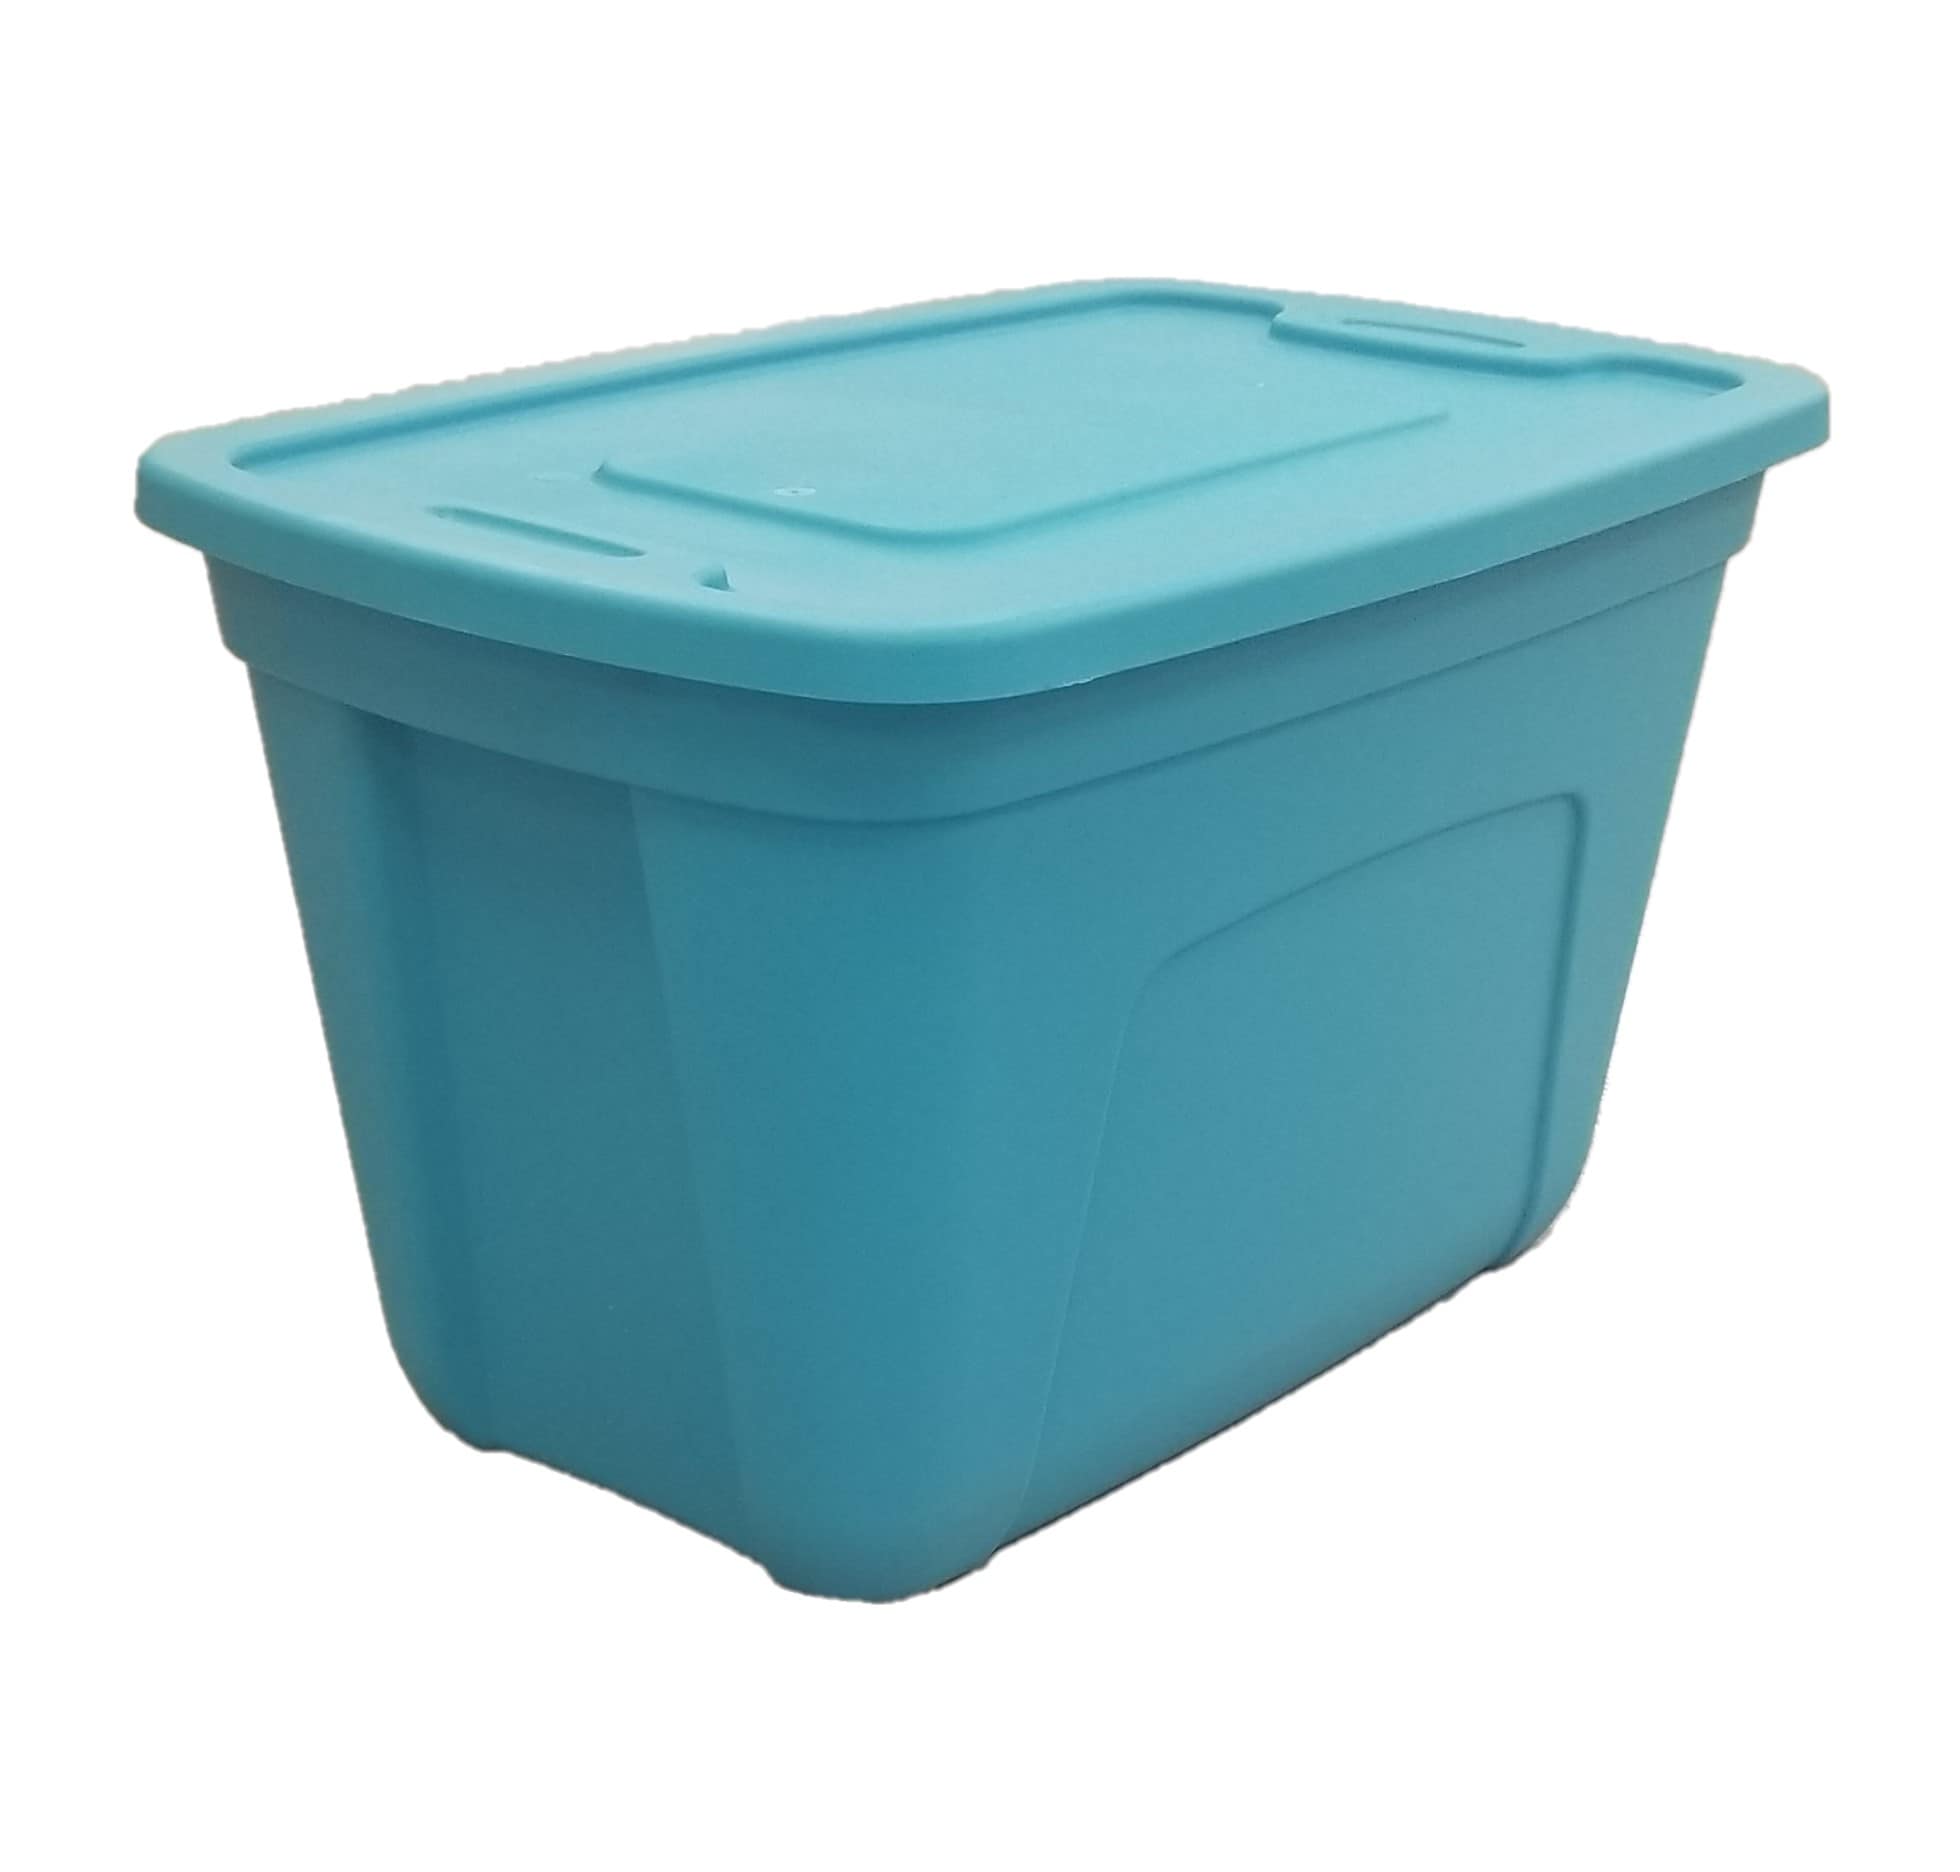 Hefty Hi-Rise 72 qt Storage Bin, Clear with Turquoise Lid